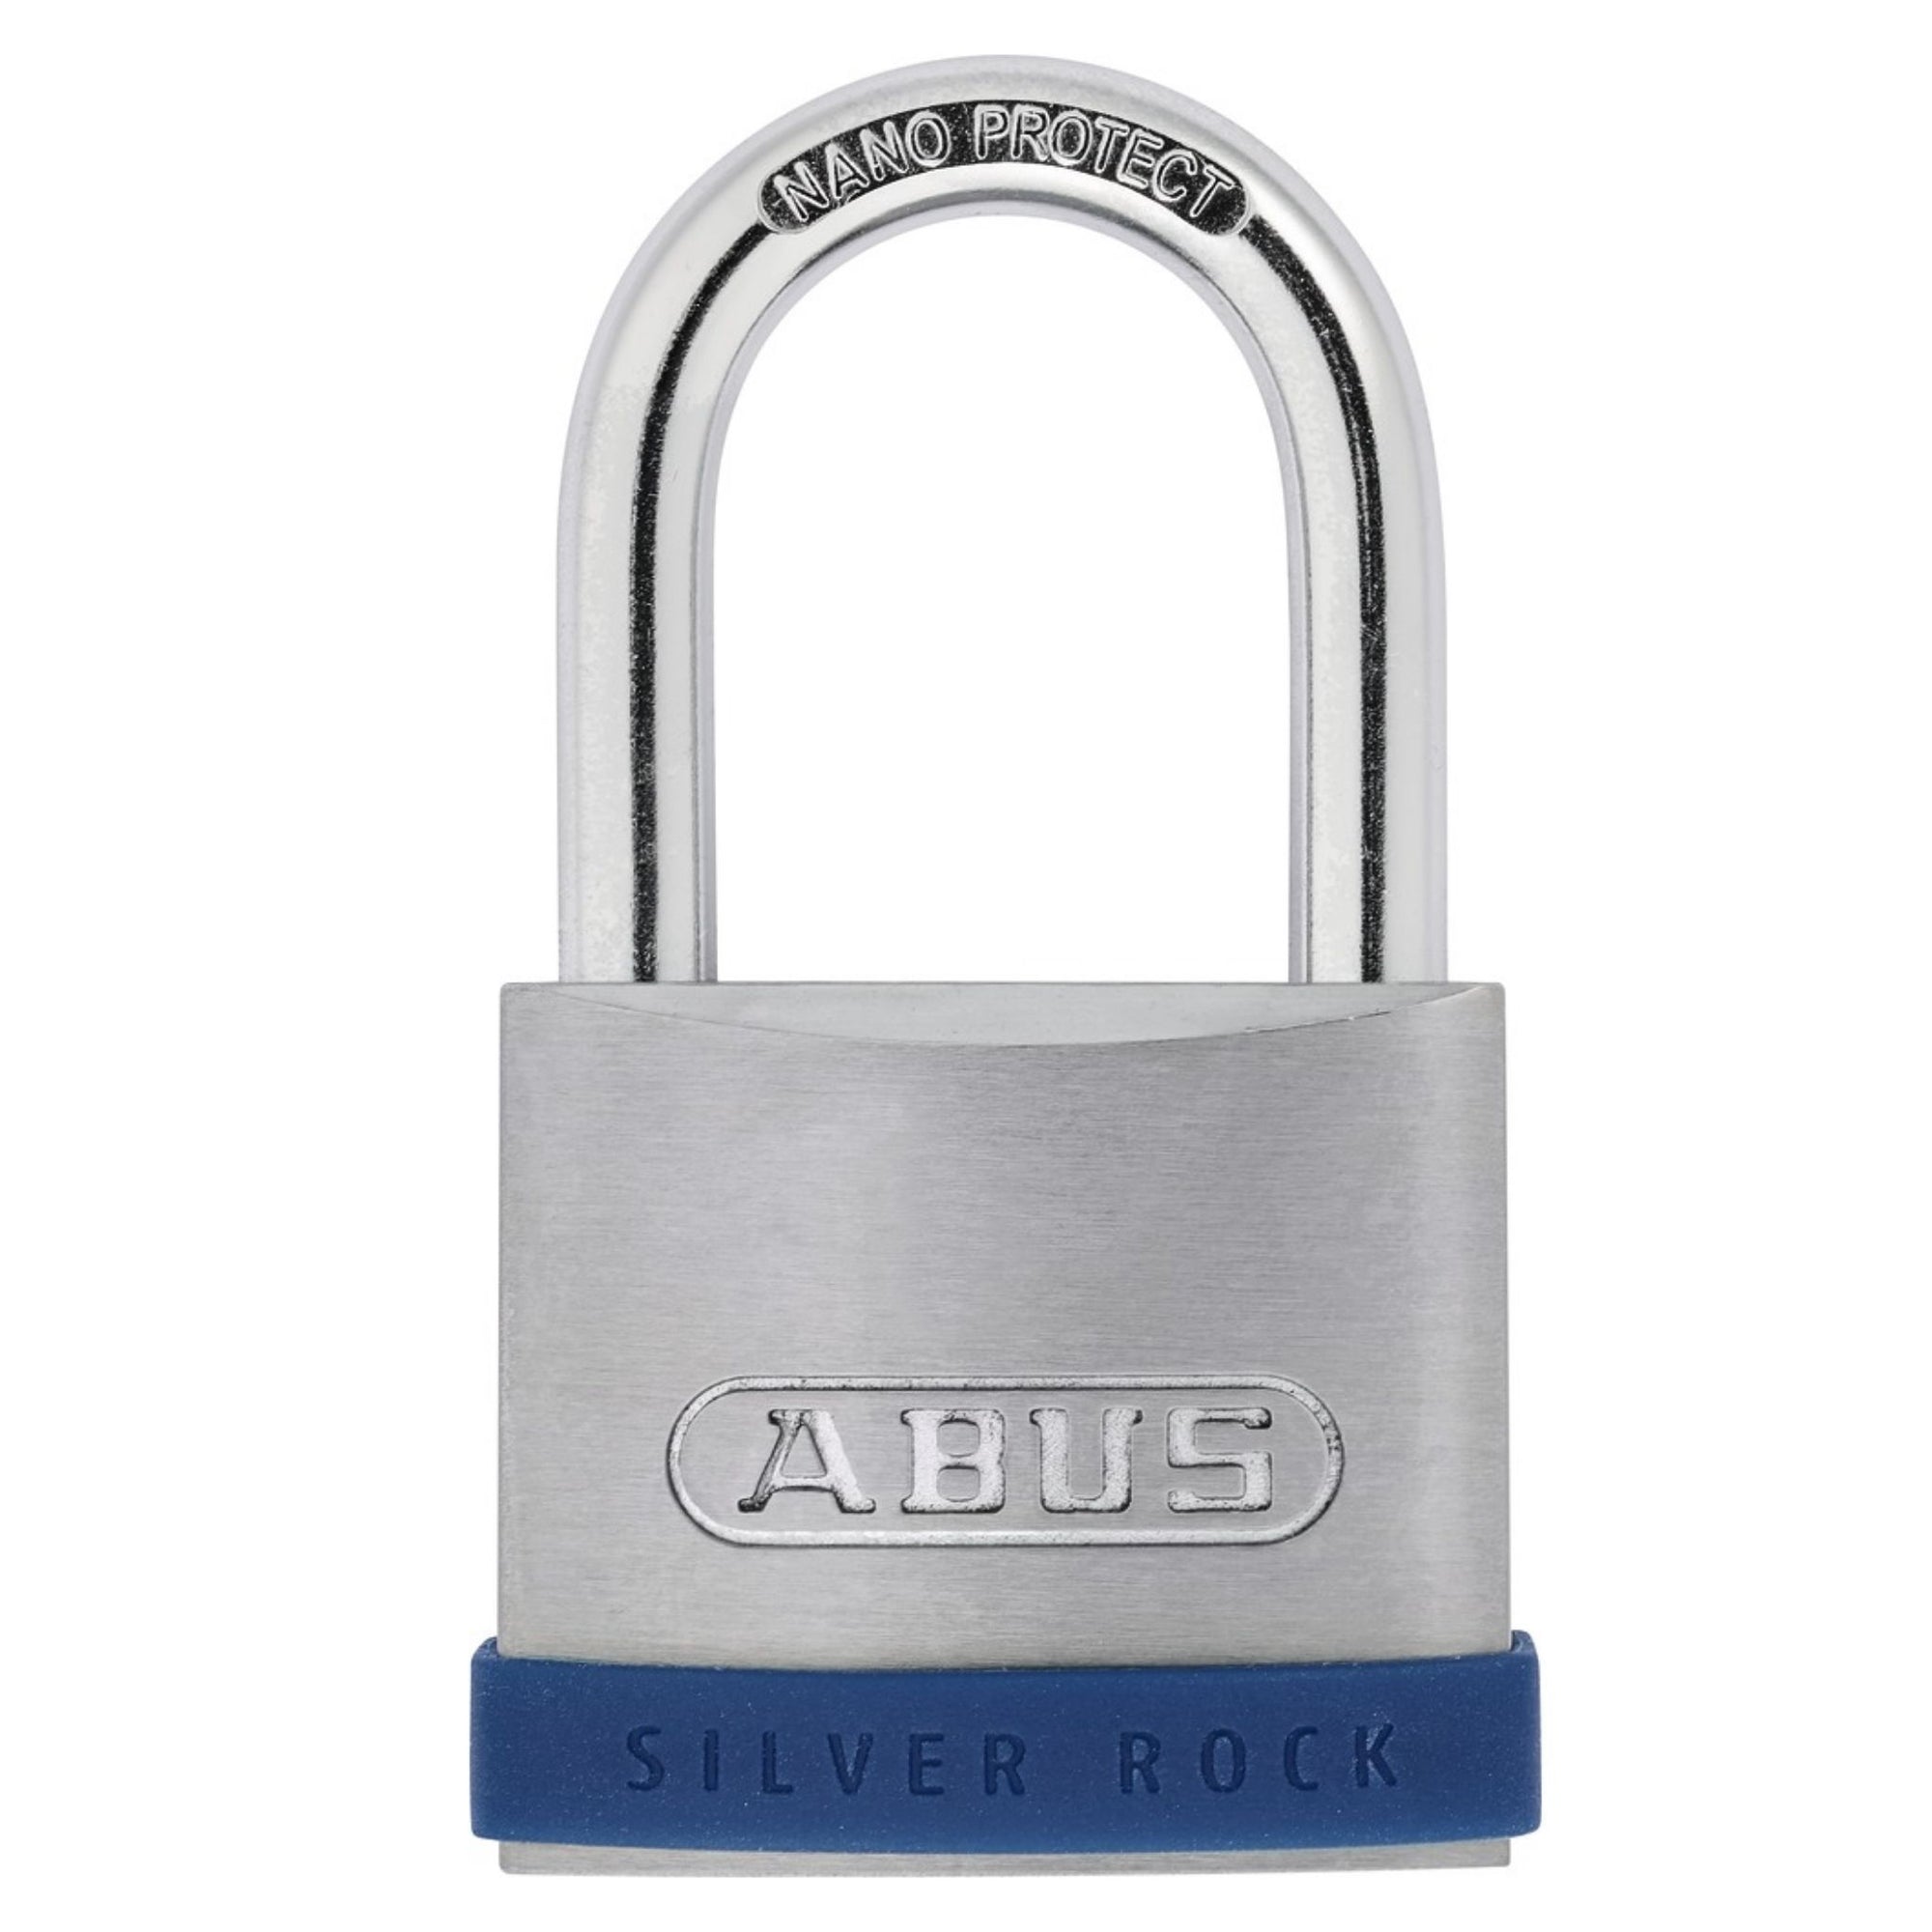 Abus 5/50HB25 KA Padlock Silver Rock Zinc Locks Keyed Alike (KA) for Toolbox Security - The Lock Source